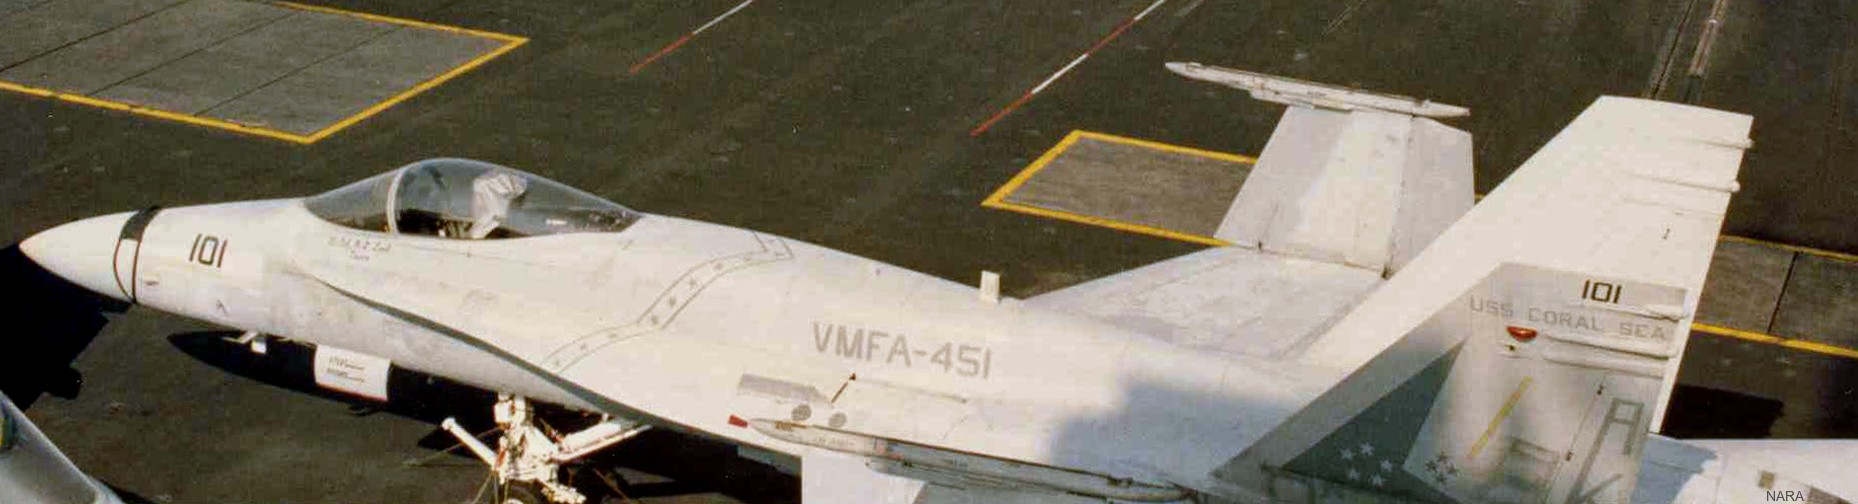 vmfa-451 warlords marine fighter attack squadron usmc f/a-18a hornet 13